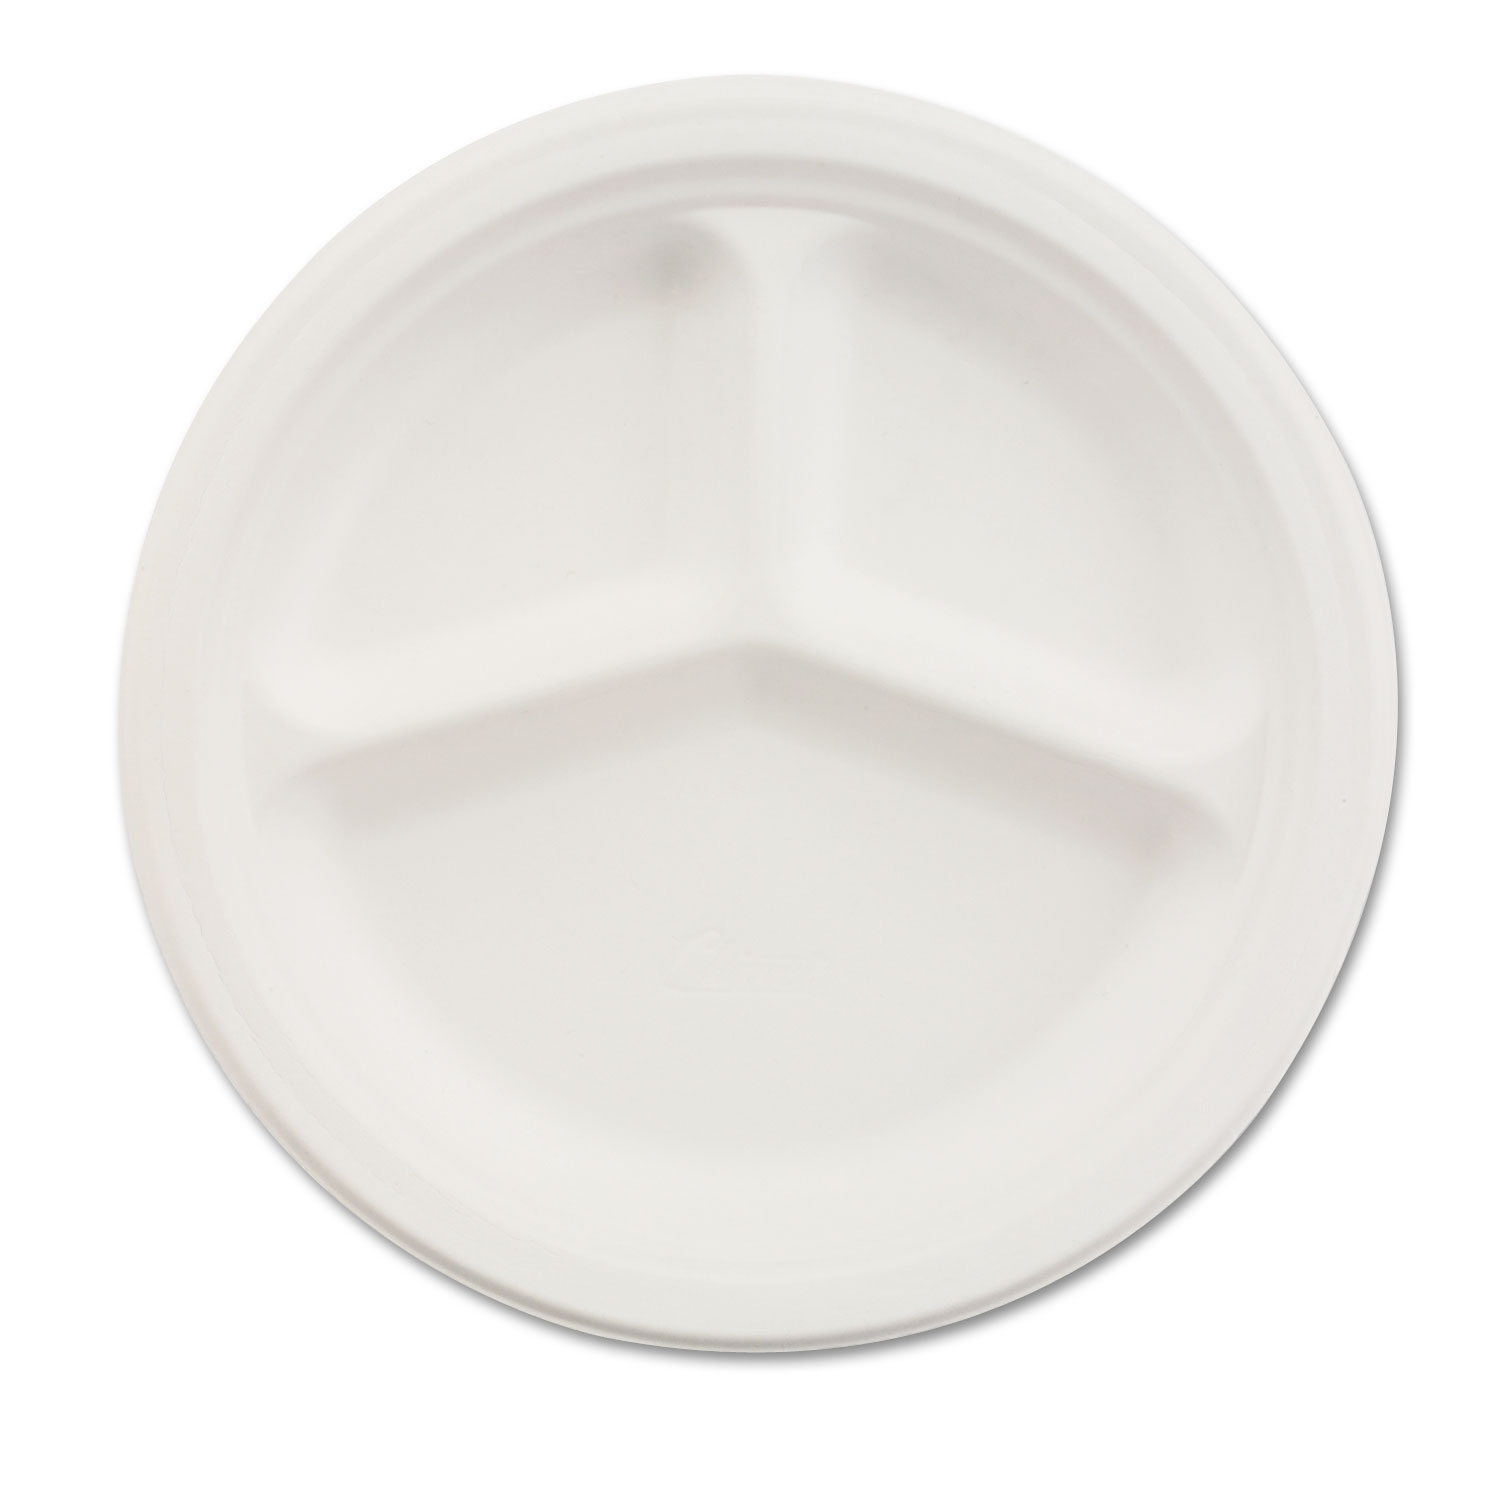  Chinet 21204 Paper Dinnerware, 3-Comp Plate, 10 1/4 dia, White, 500/Carton (HUH21204CT) 